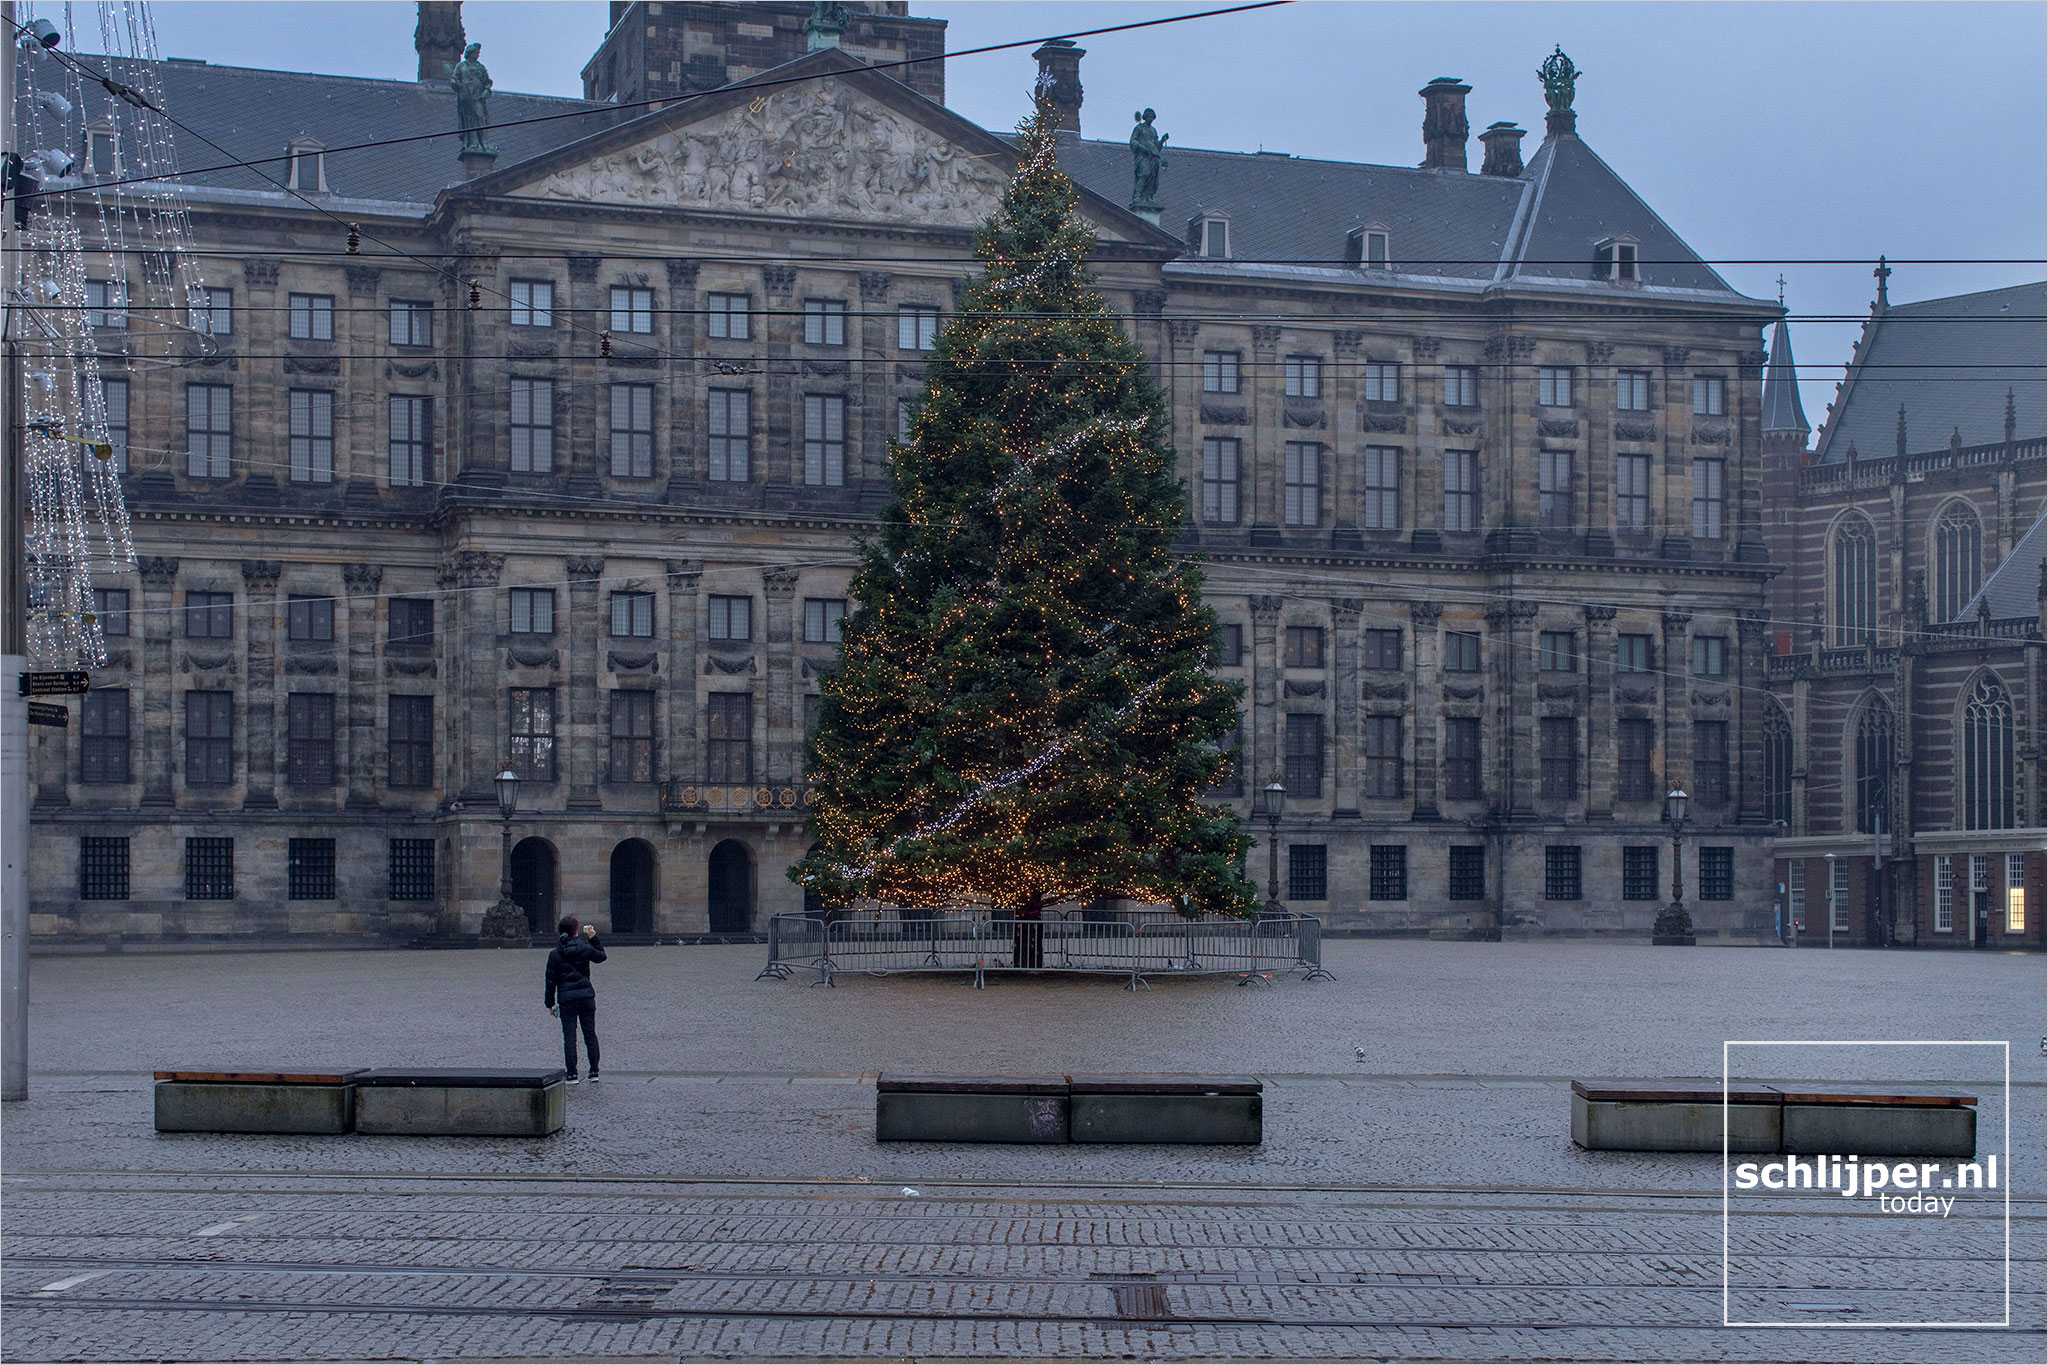 The Netherlands, Amsterdam, 23 december 2020